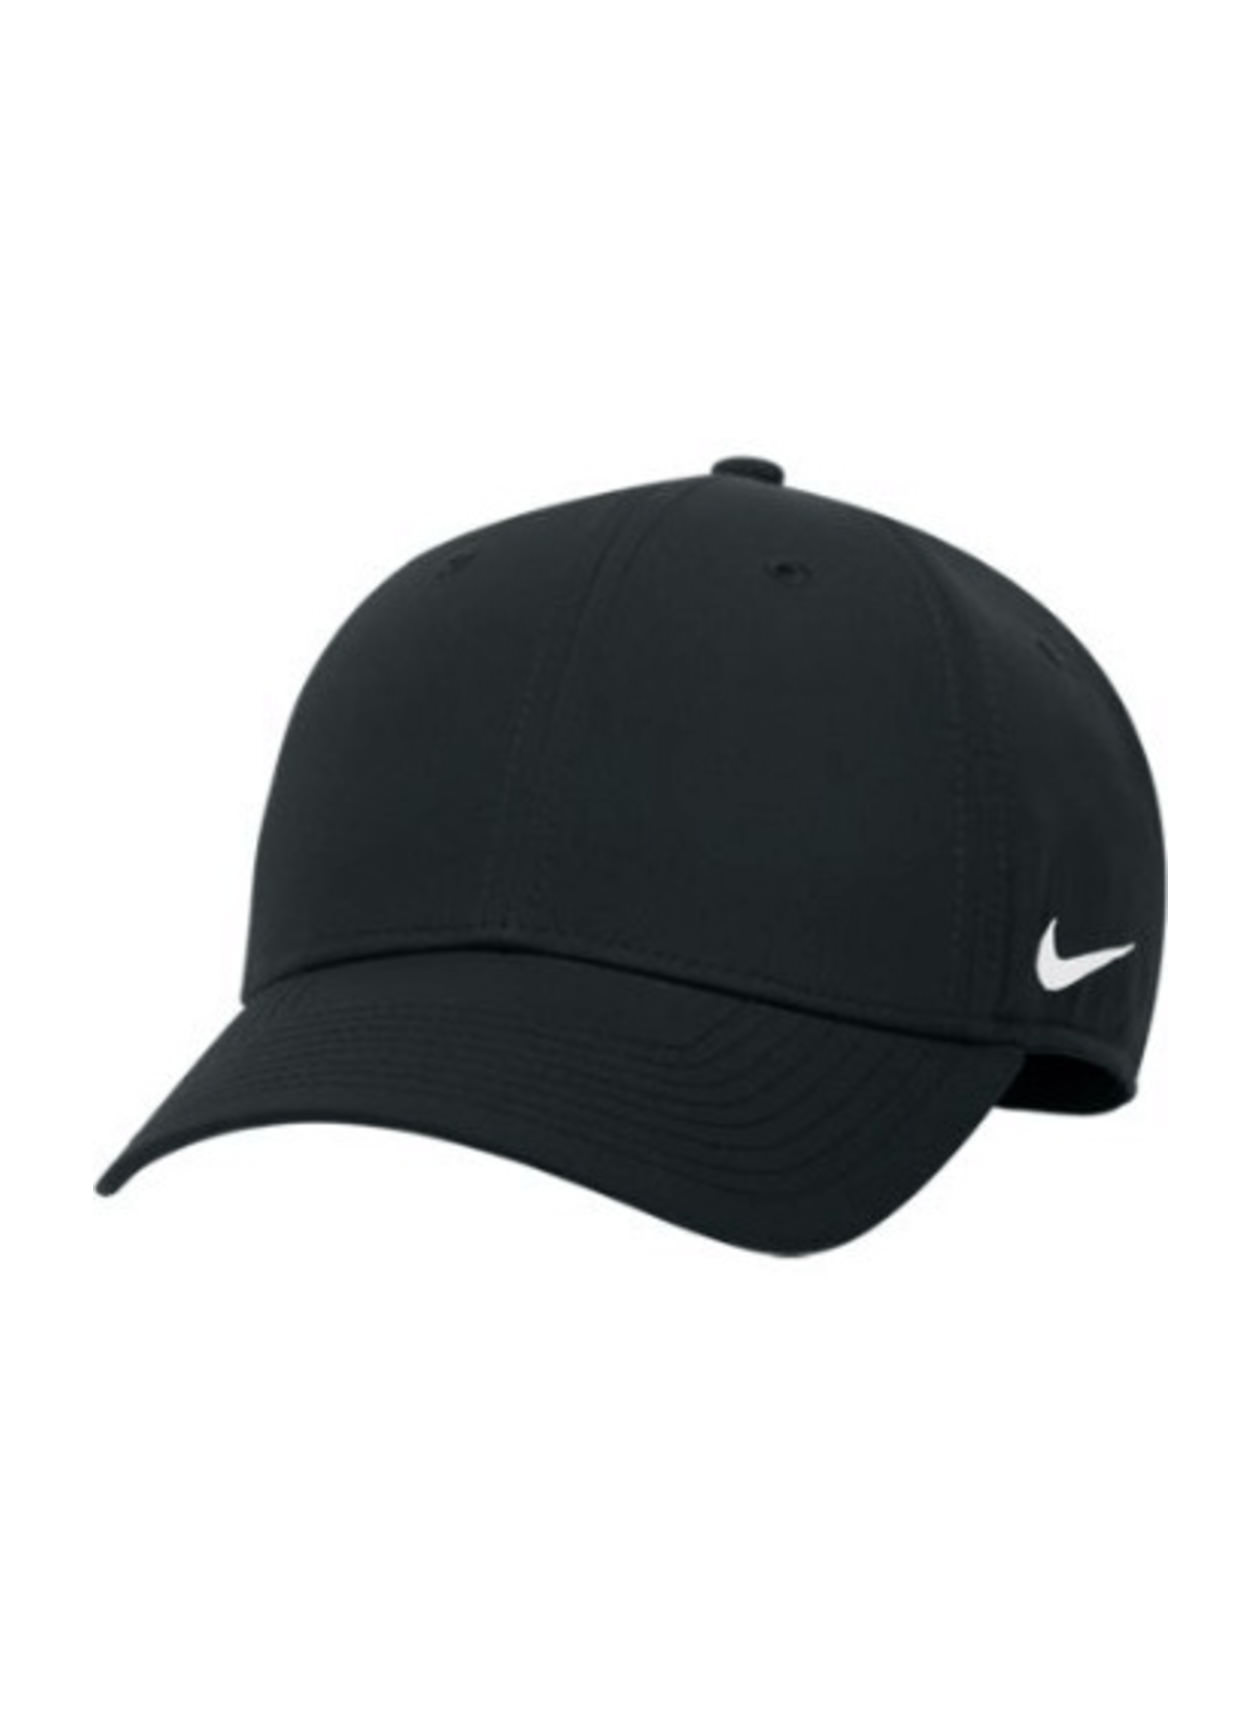 Nike Legacy 91 Adjustable Hat | Nike